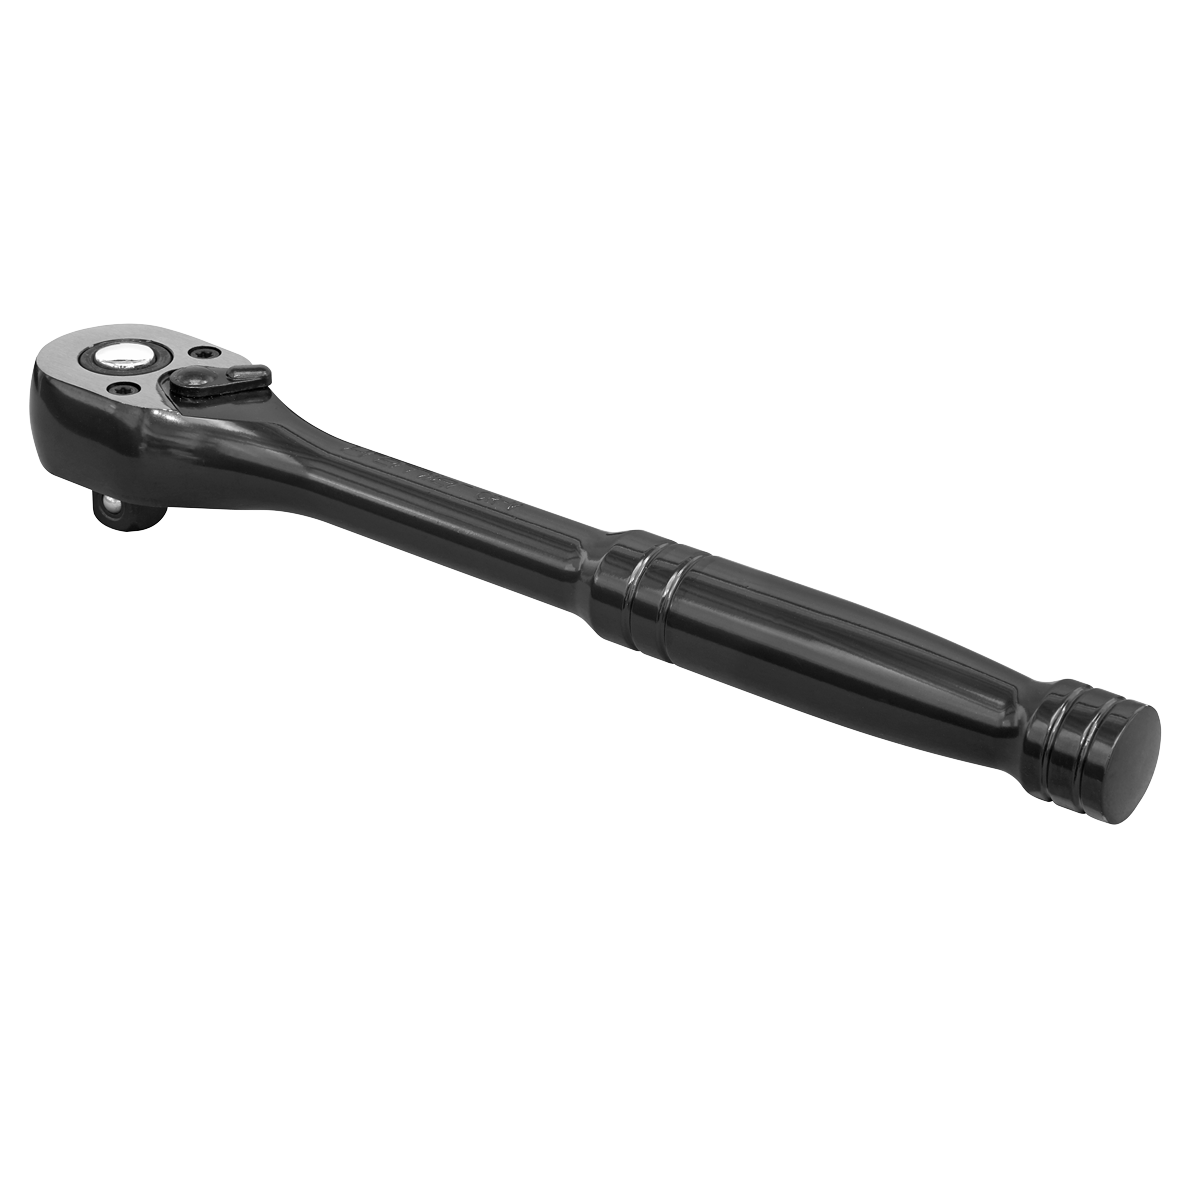 Sealey Ratchet Wrench 3/8"Sq Drive - Premier Black